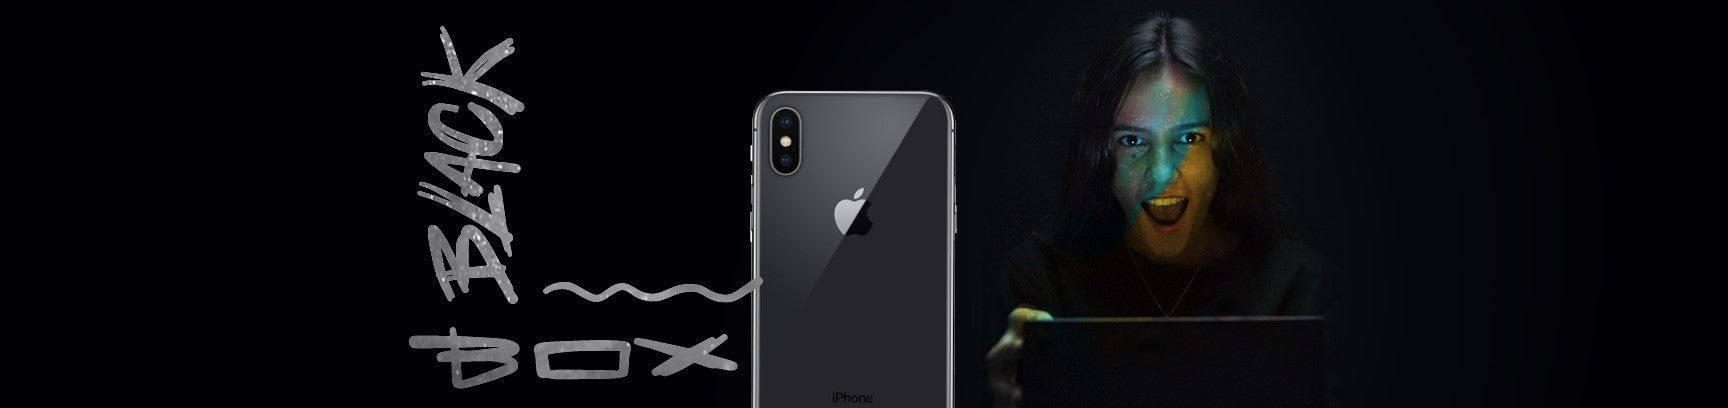 Descontos iPhone Black Friday 2019